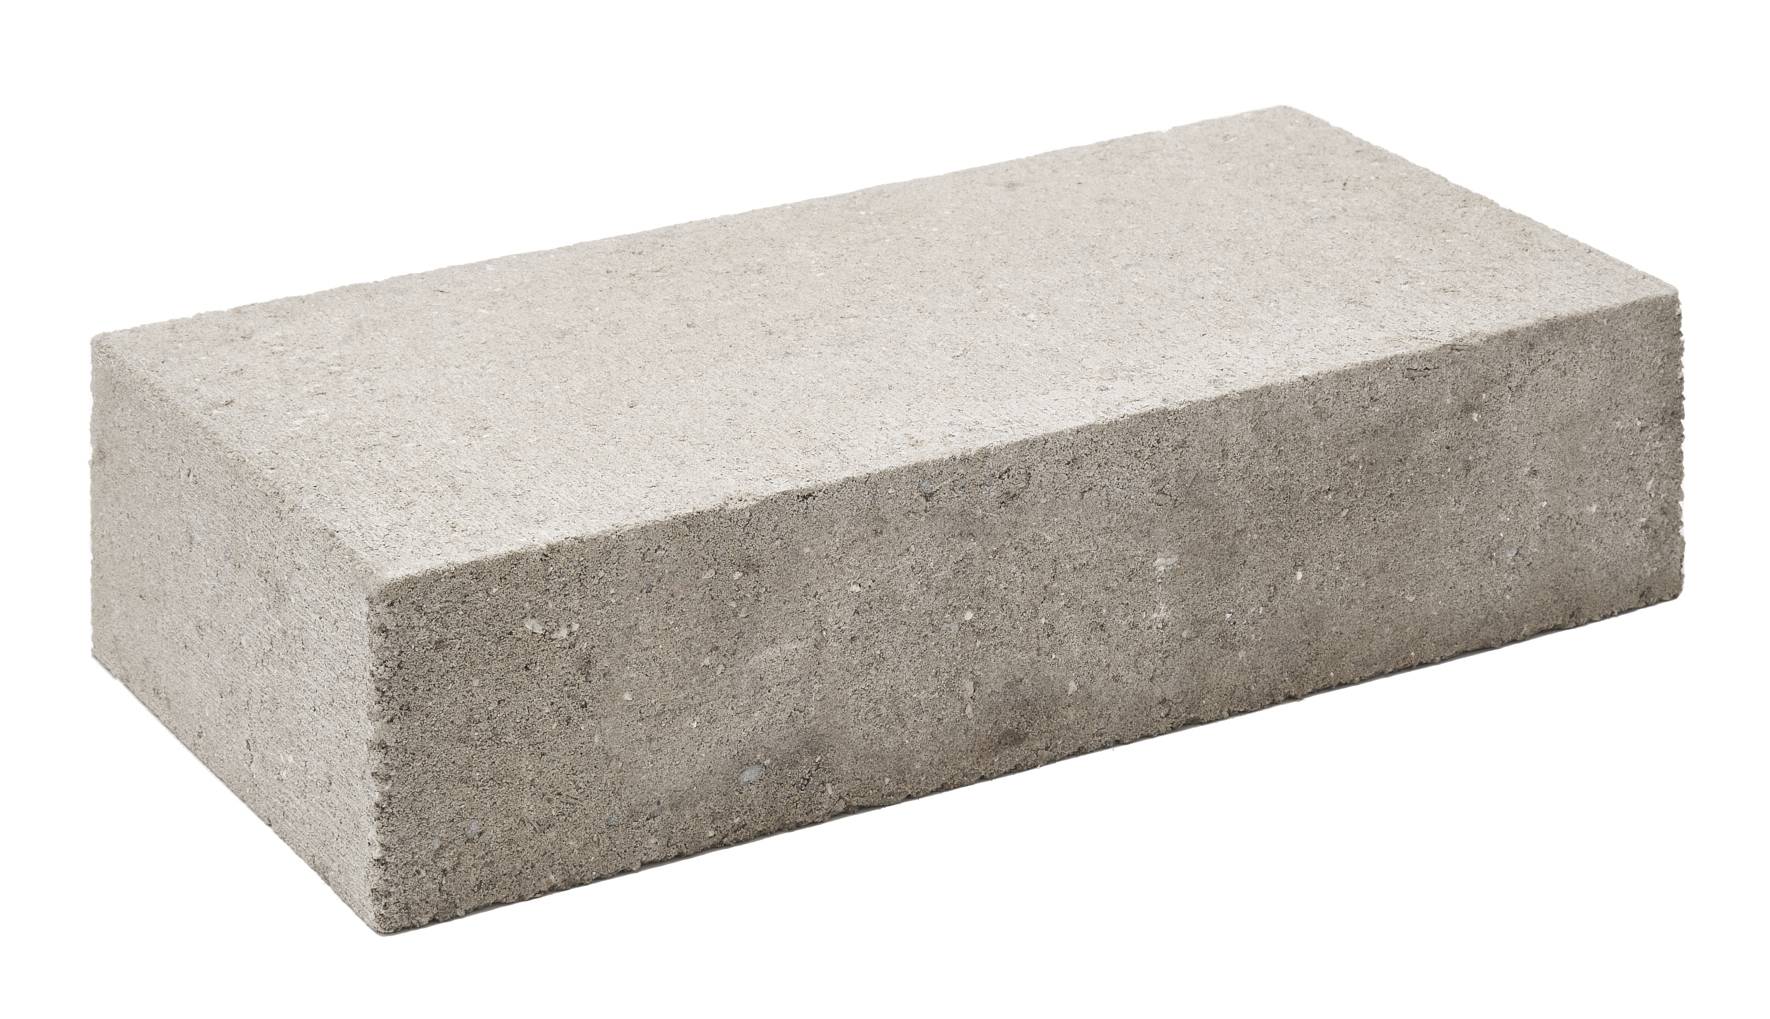 Lignacite SP 140 mm 10.4 N Concrete Blocks - SP Fine-Textured Loadbearing Units